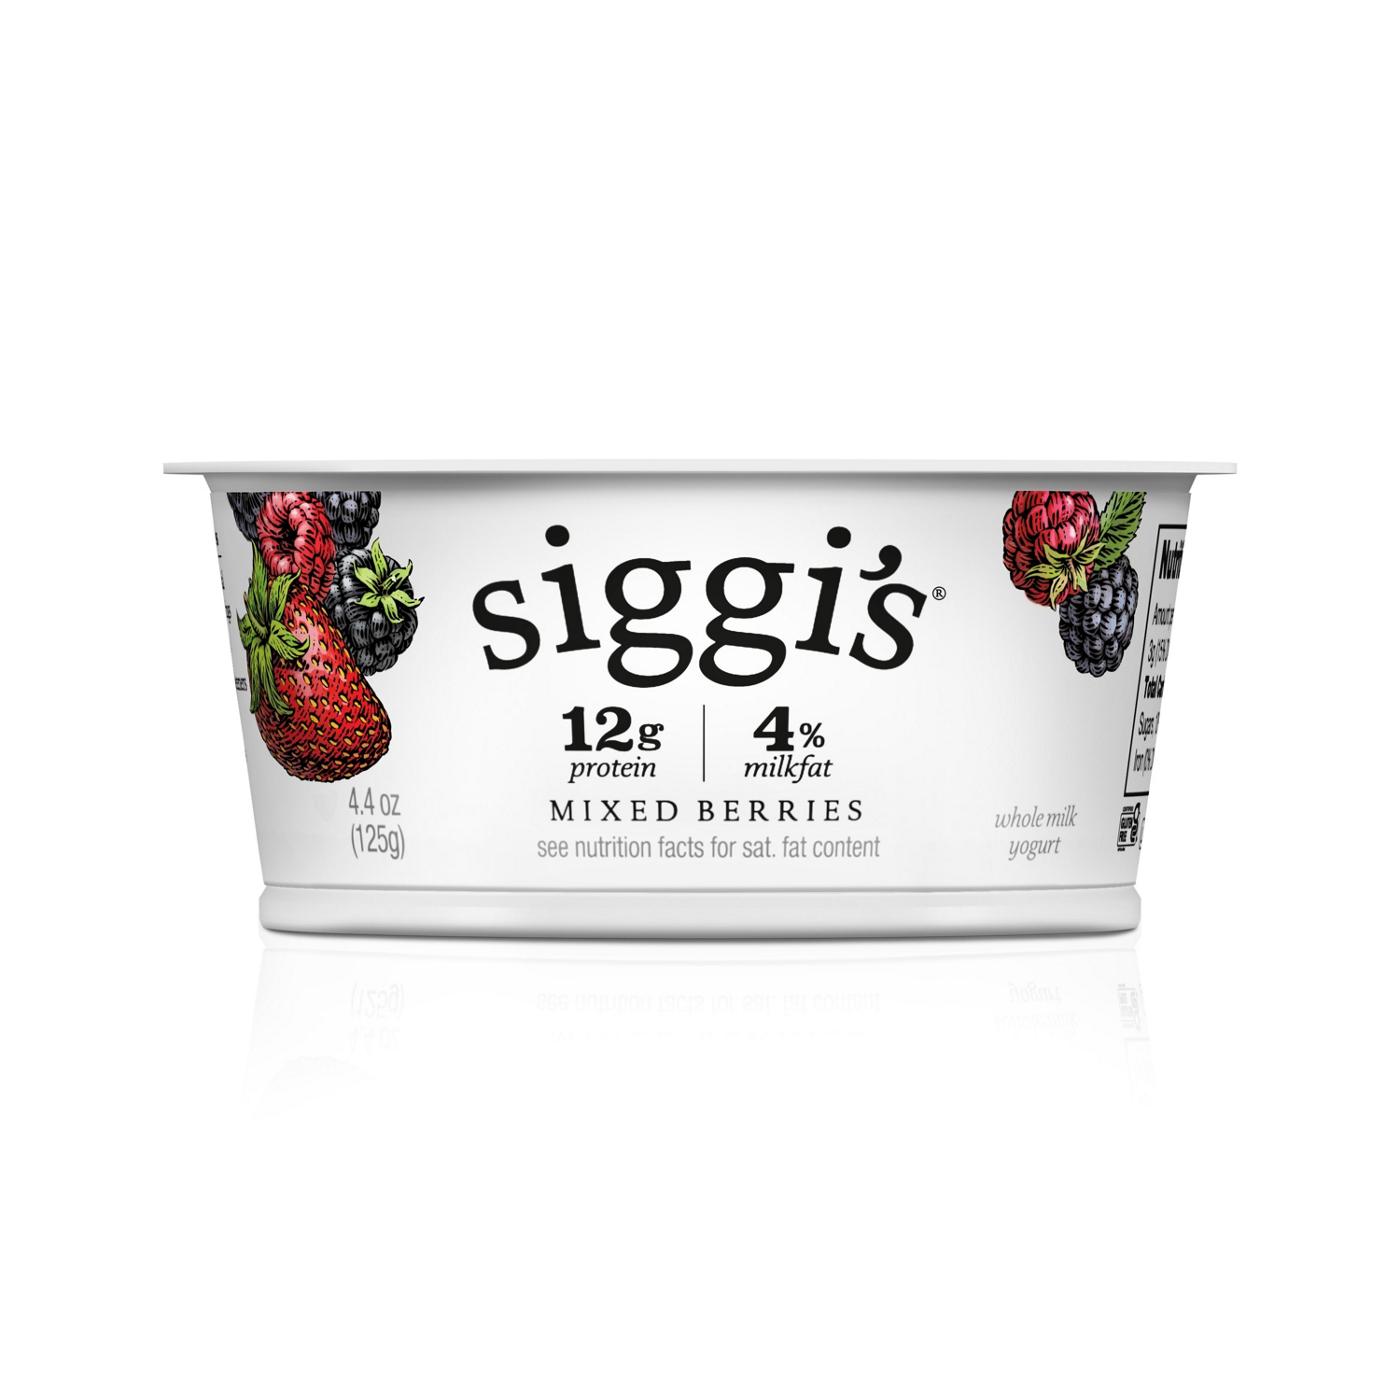 Siggi's 4% Strained Whole Milk Skyr Mixed Berries Yogurt; image 1 of 2